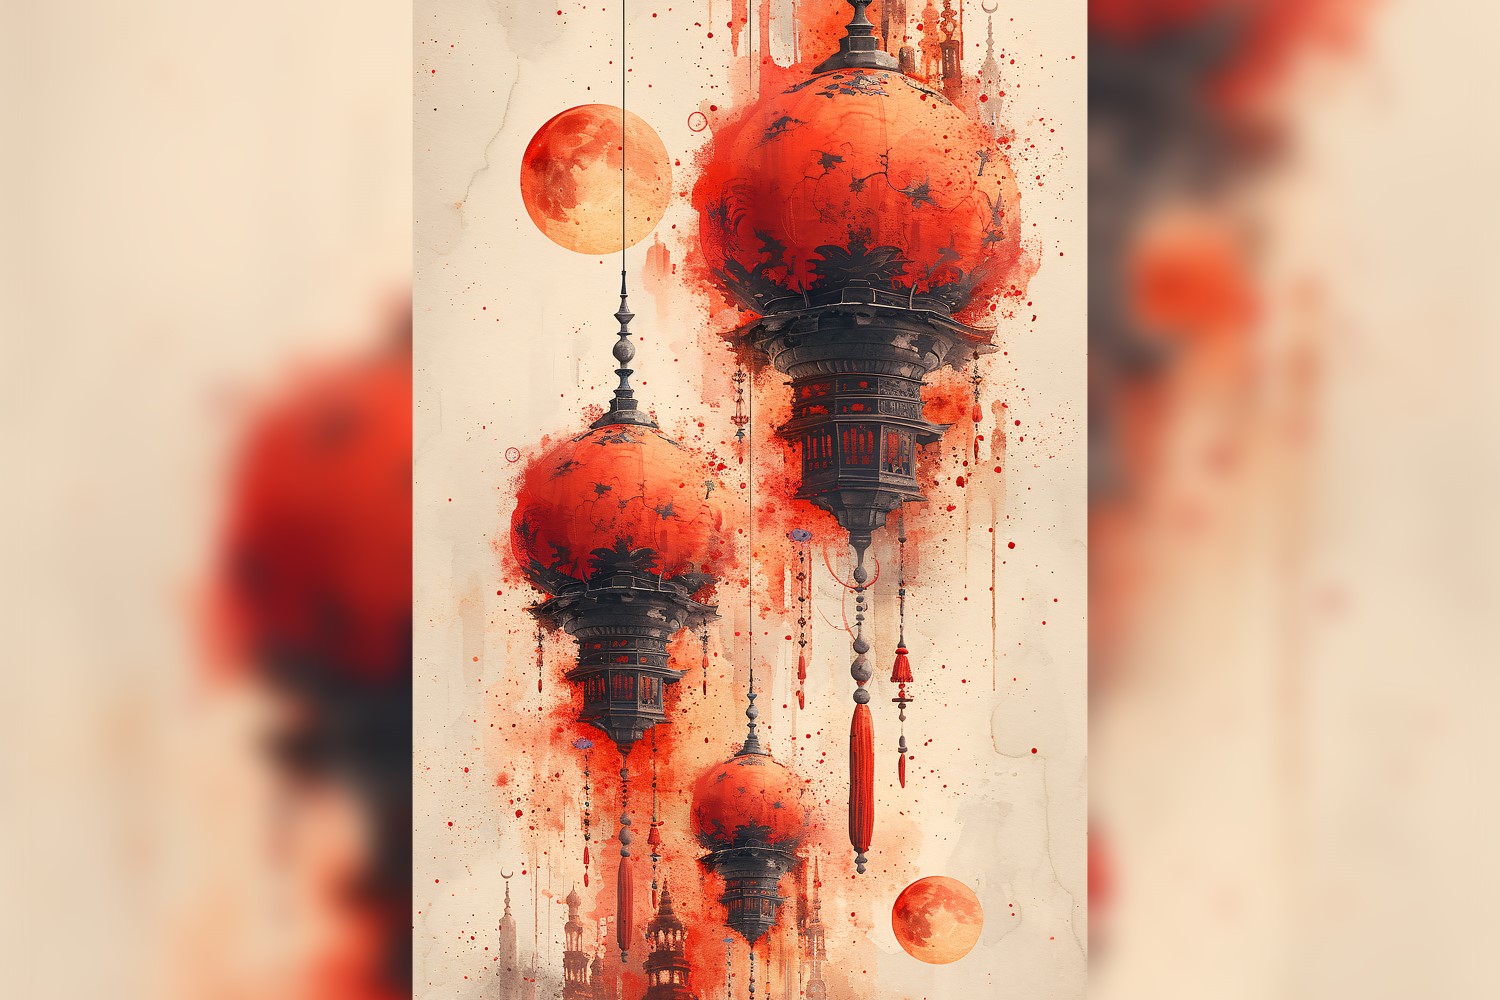 Ramadan Kareem greeting poster design with watercolor moon and lantern background